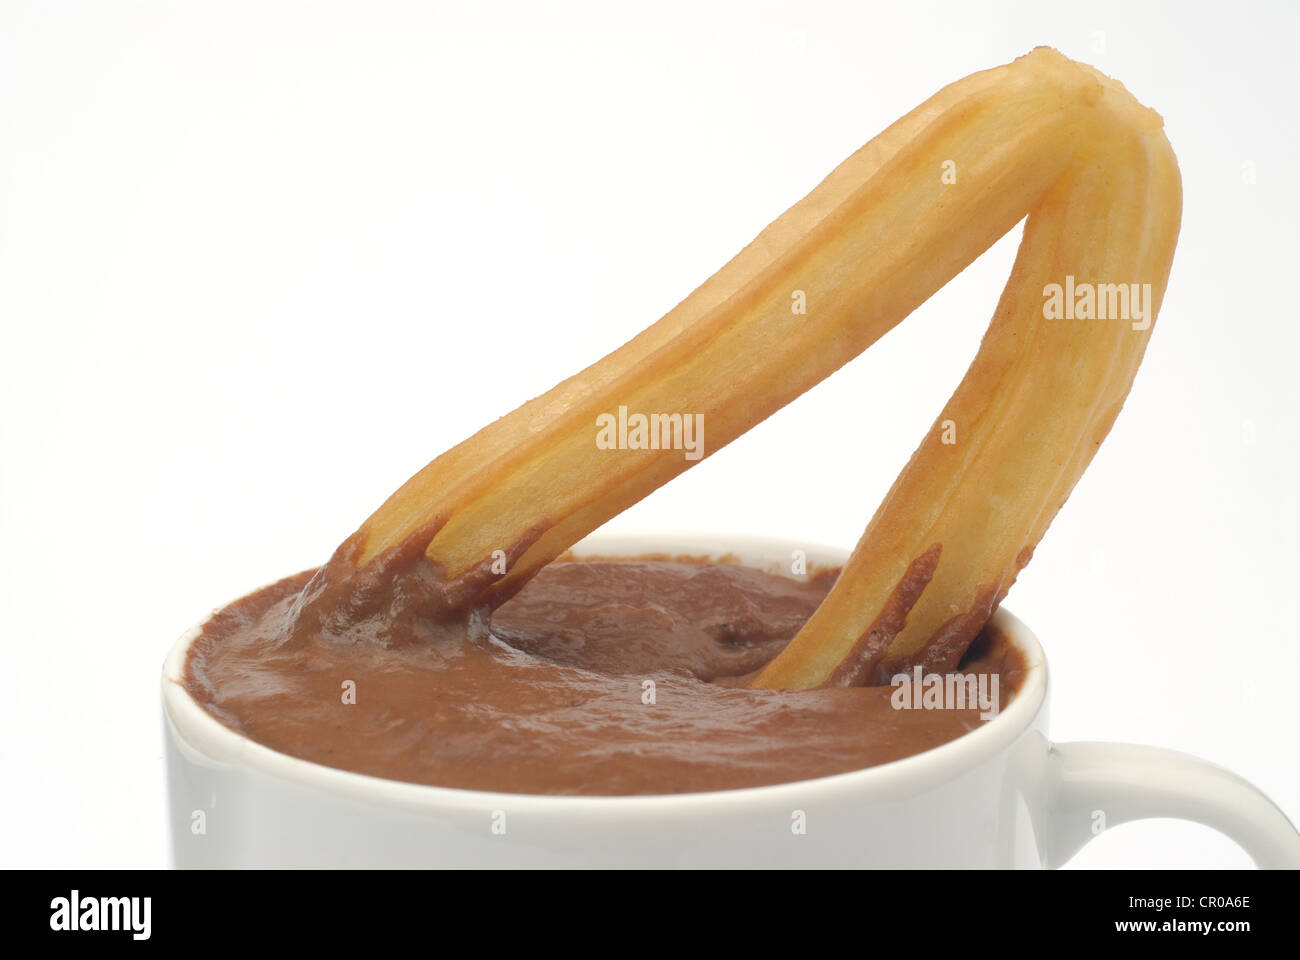 hot chocolate with churros on white background Stock Photo